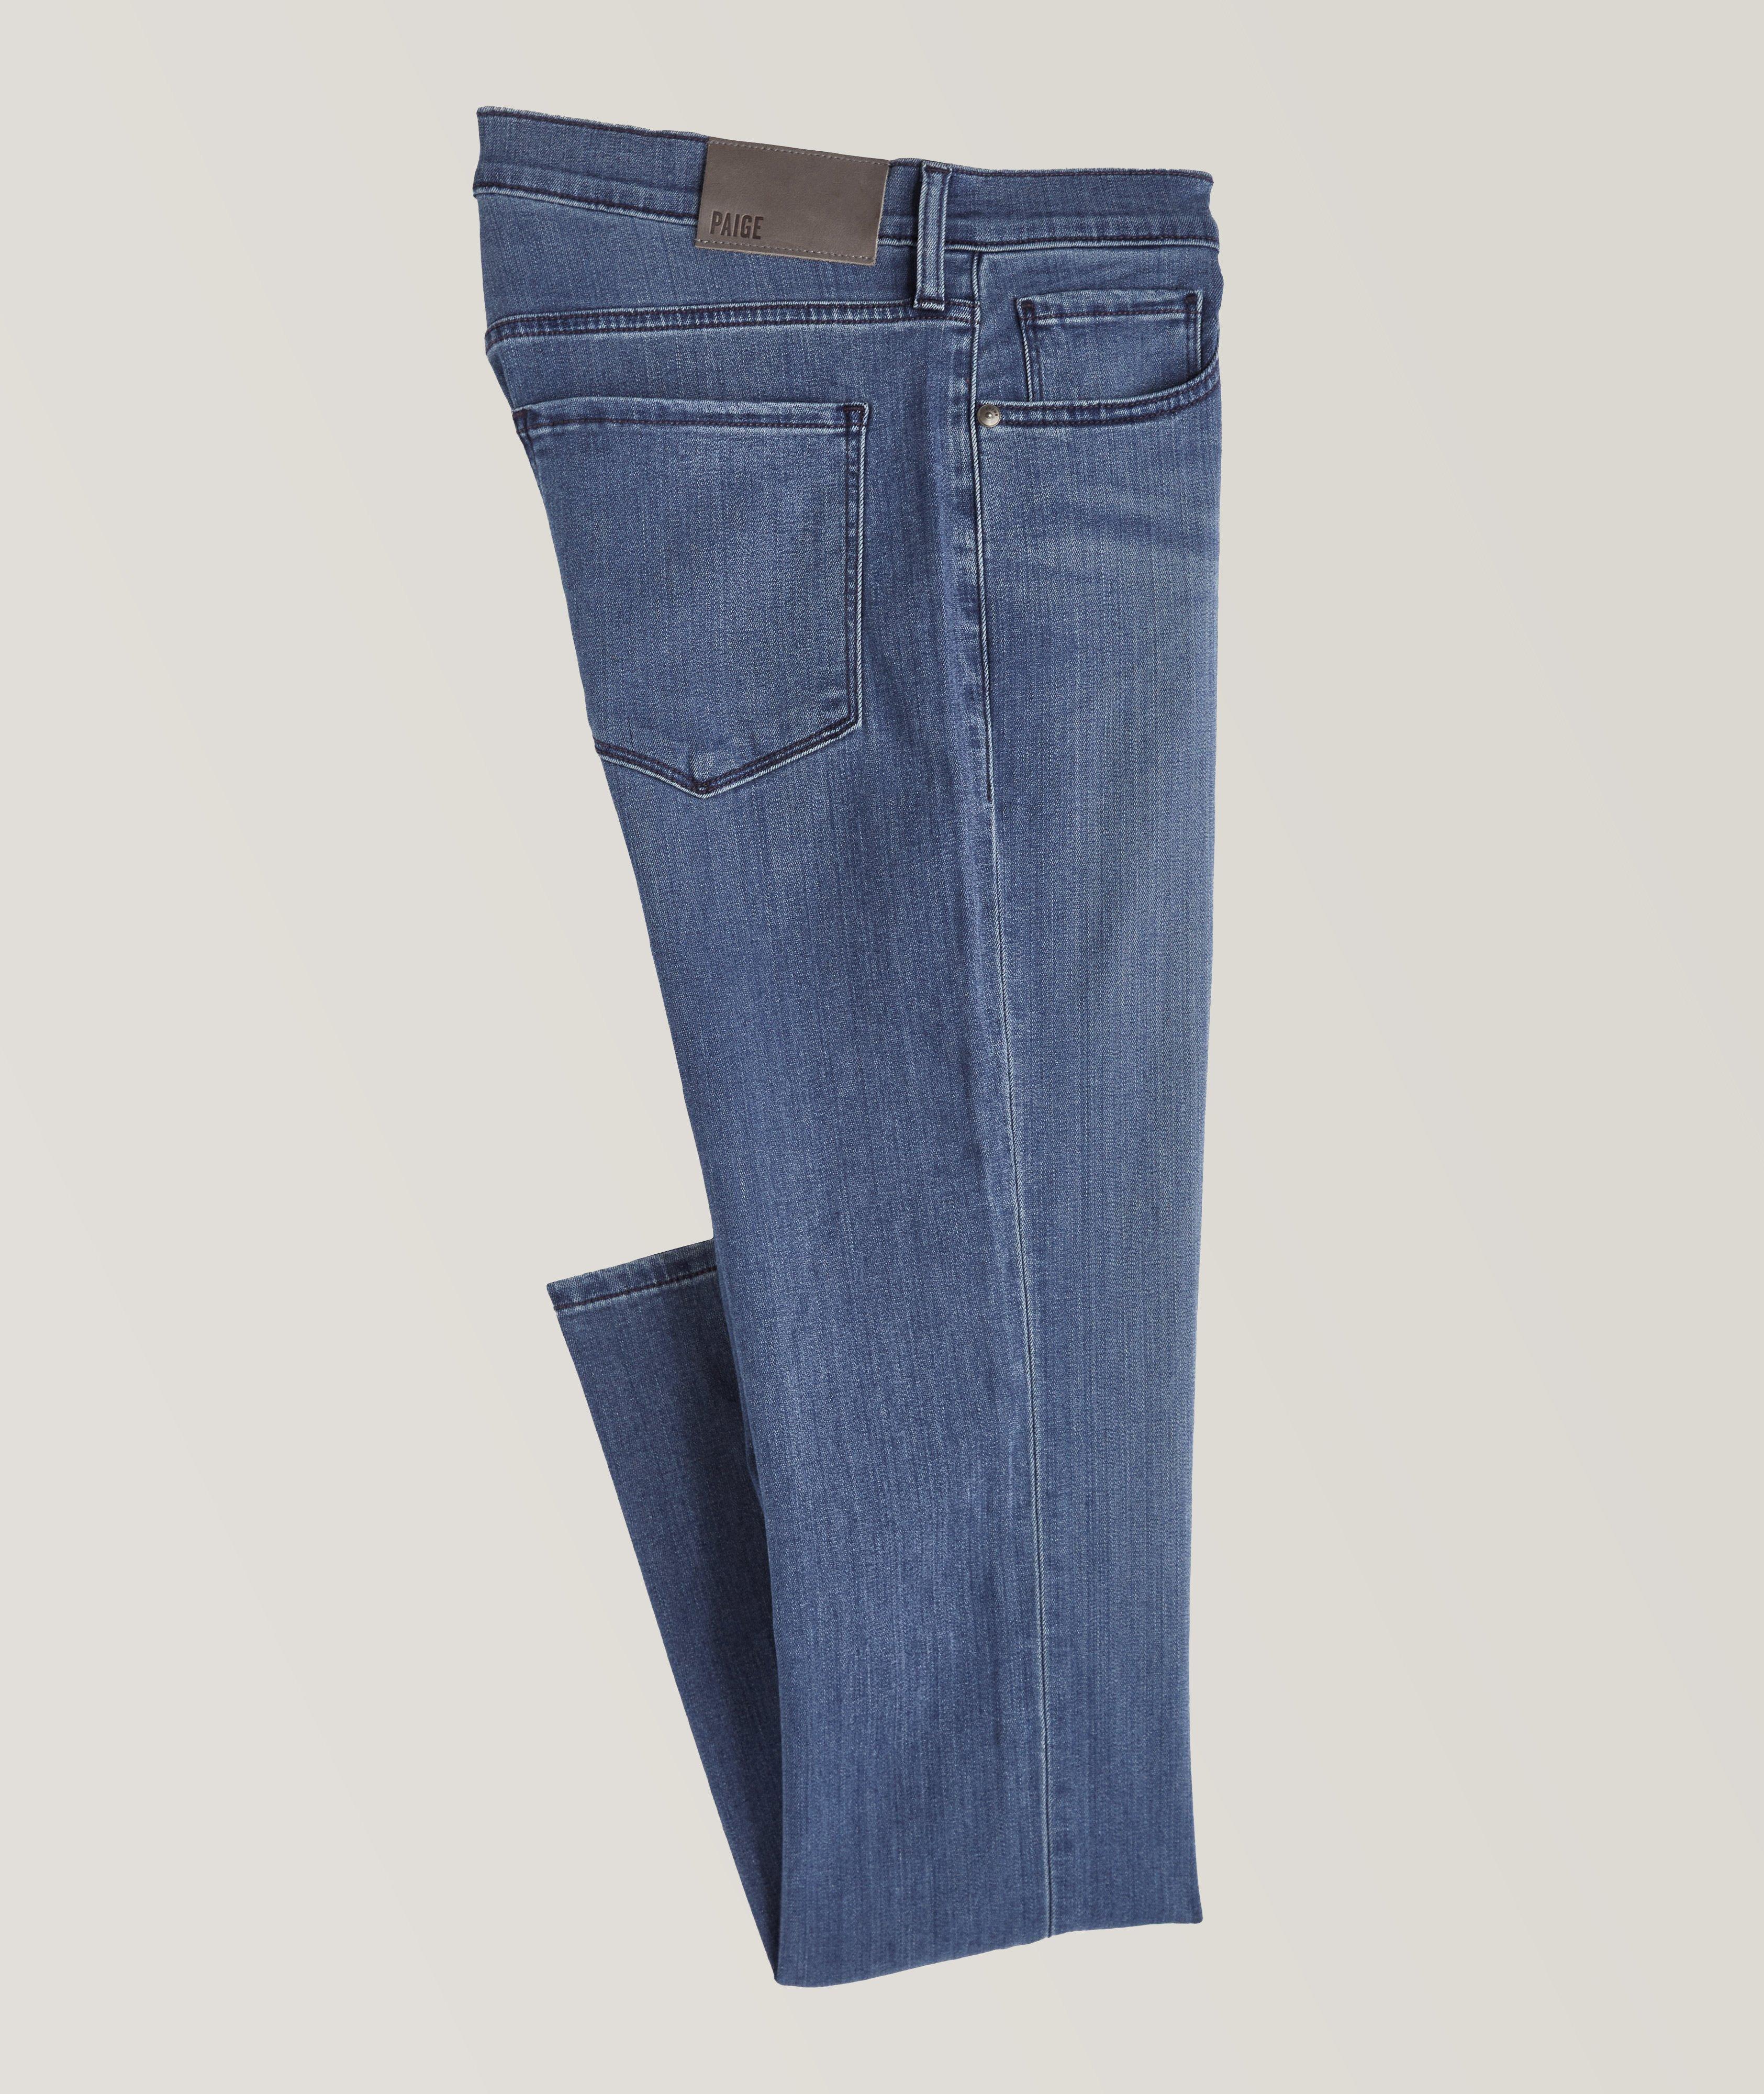 Lennox Slim Jeans image 0